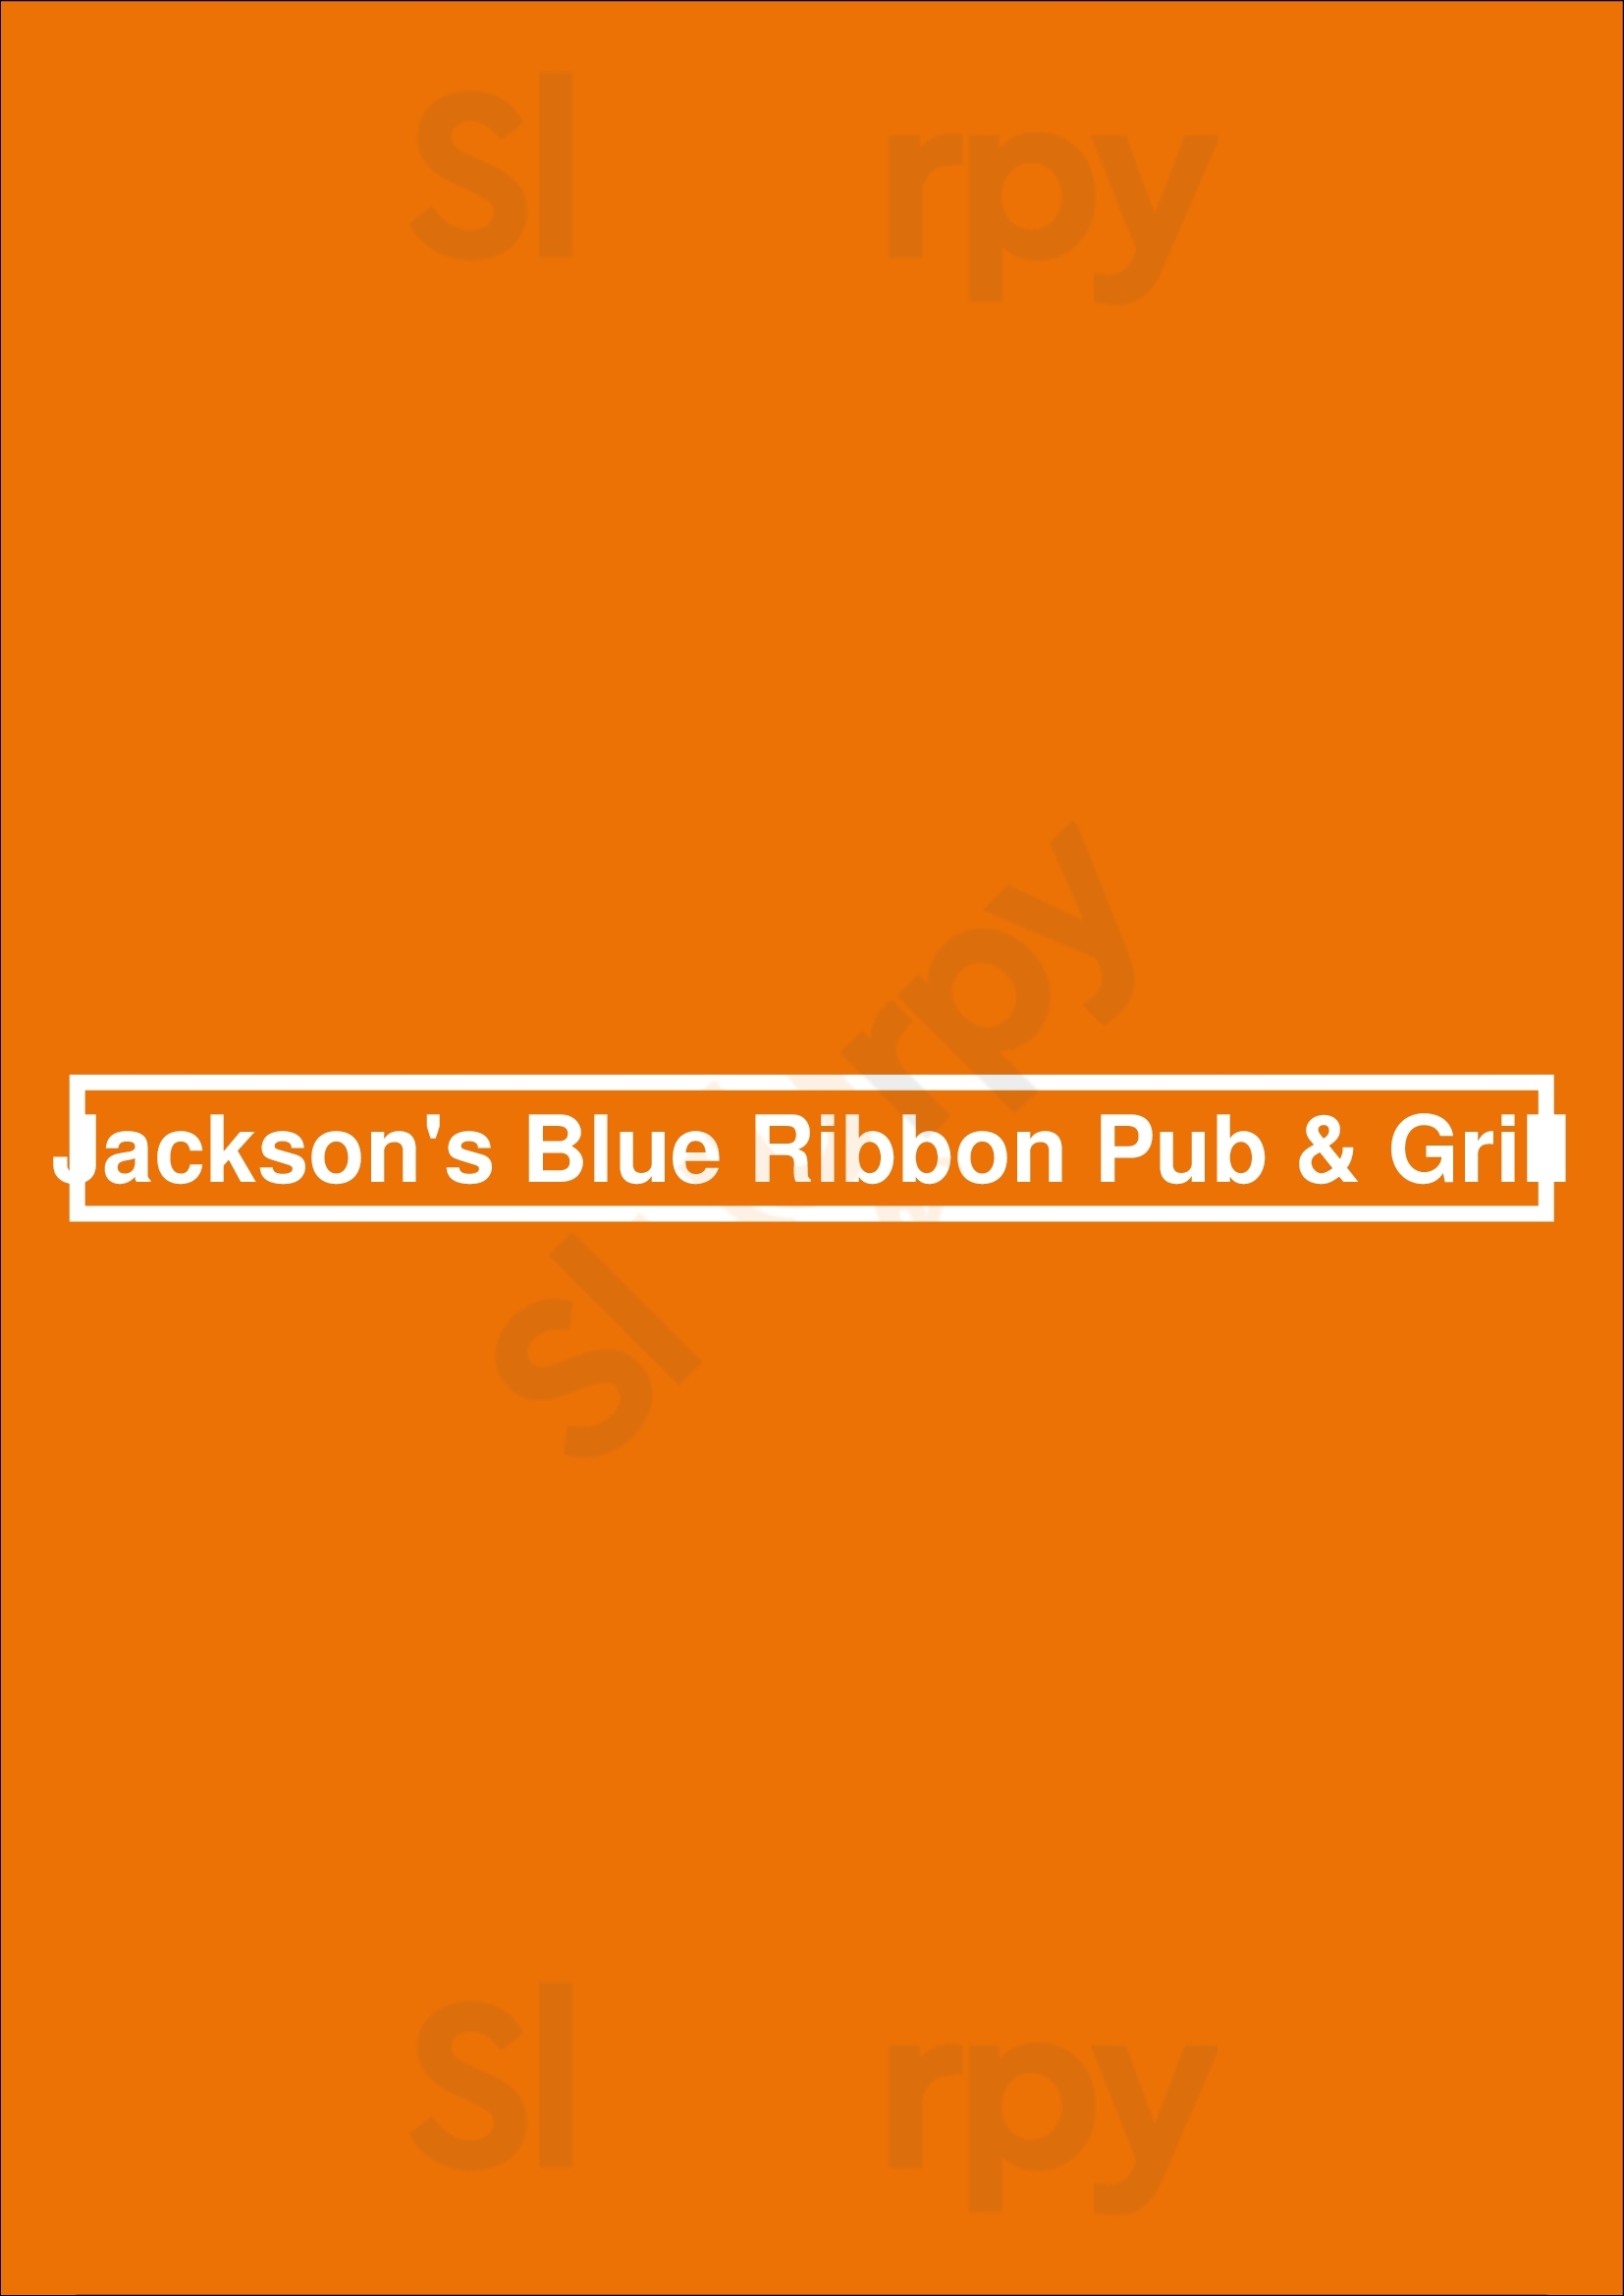 Jackson's Blue Ribbon Pub & Grill Milwaukee Menu - 1